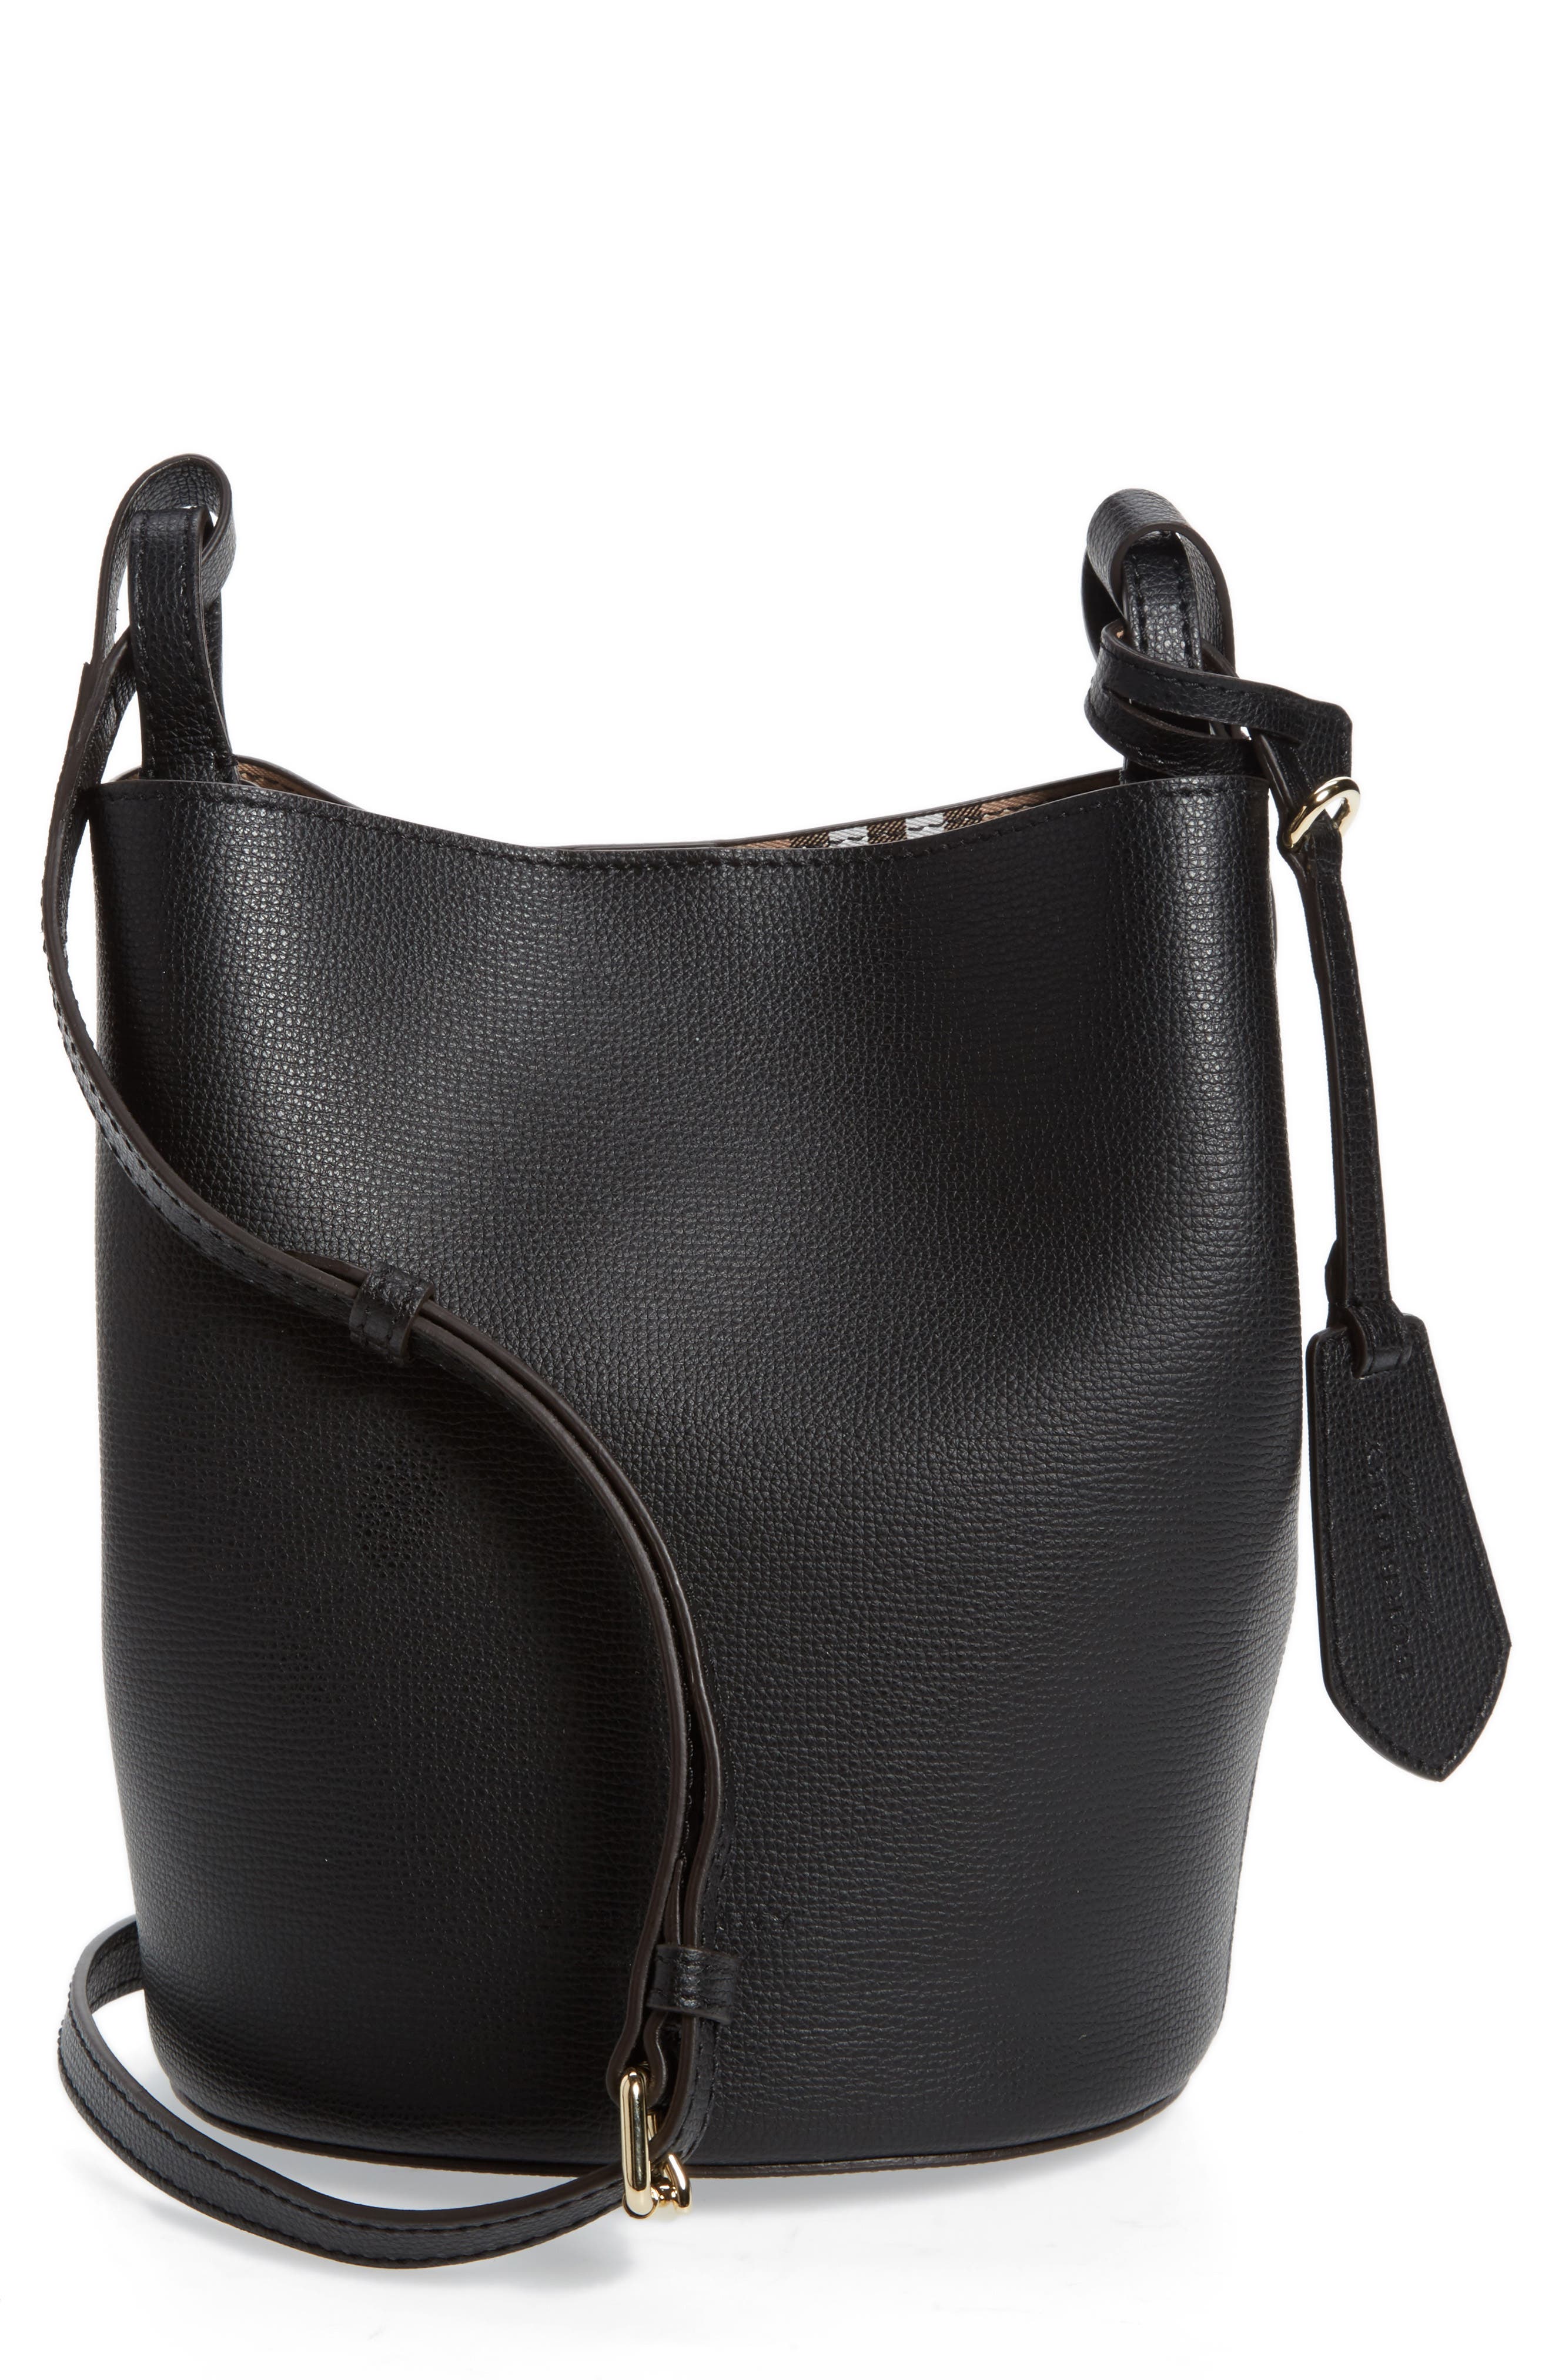 burberry leather bucket bag